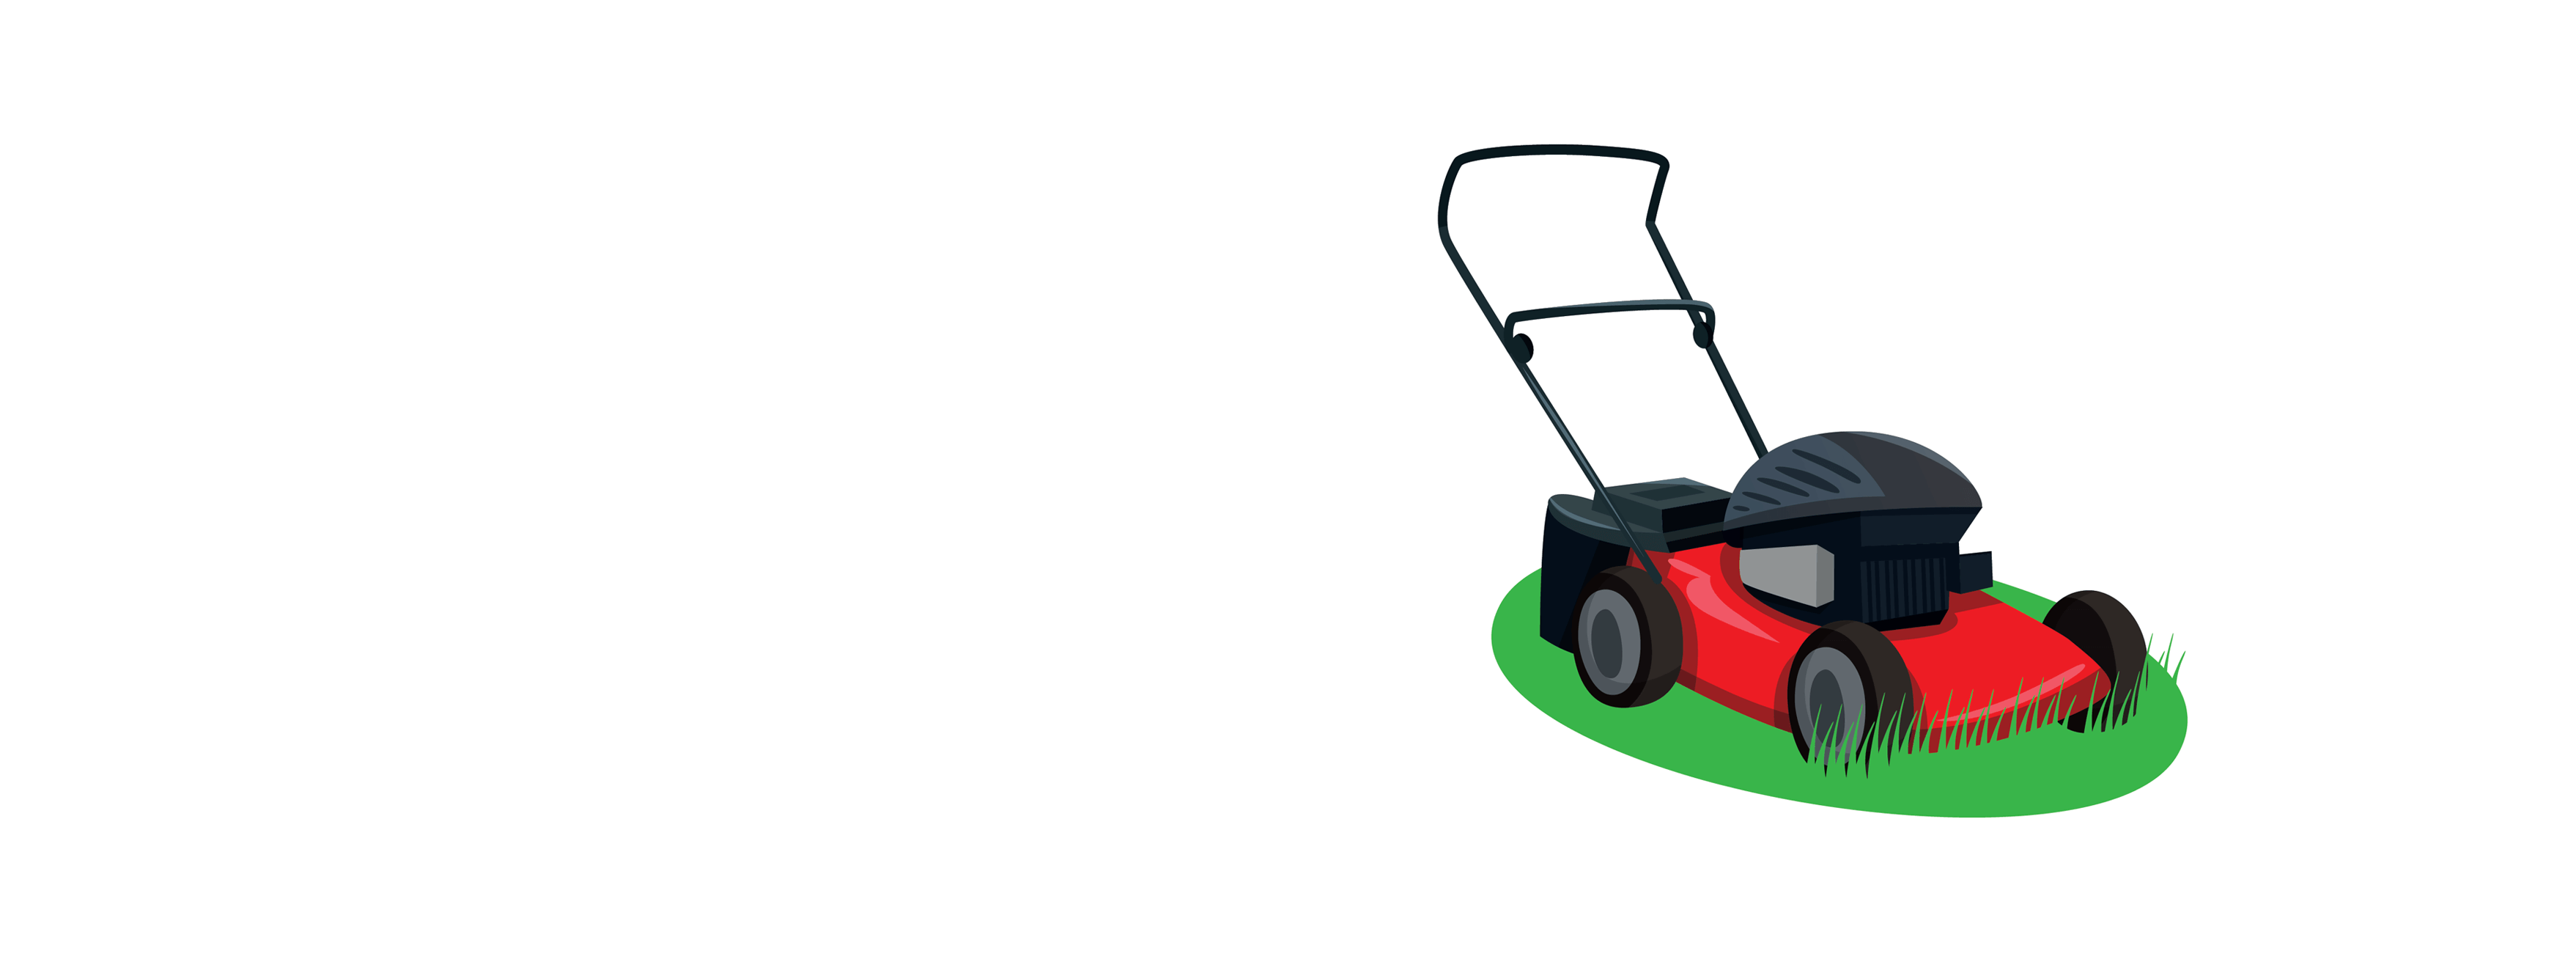 Herrera Landscaping